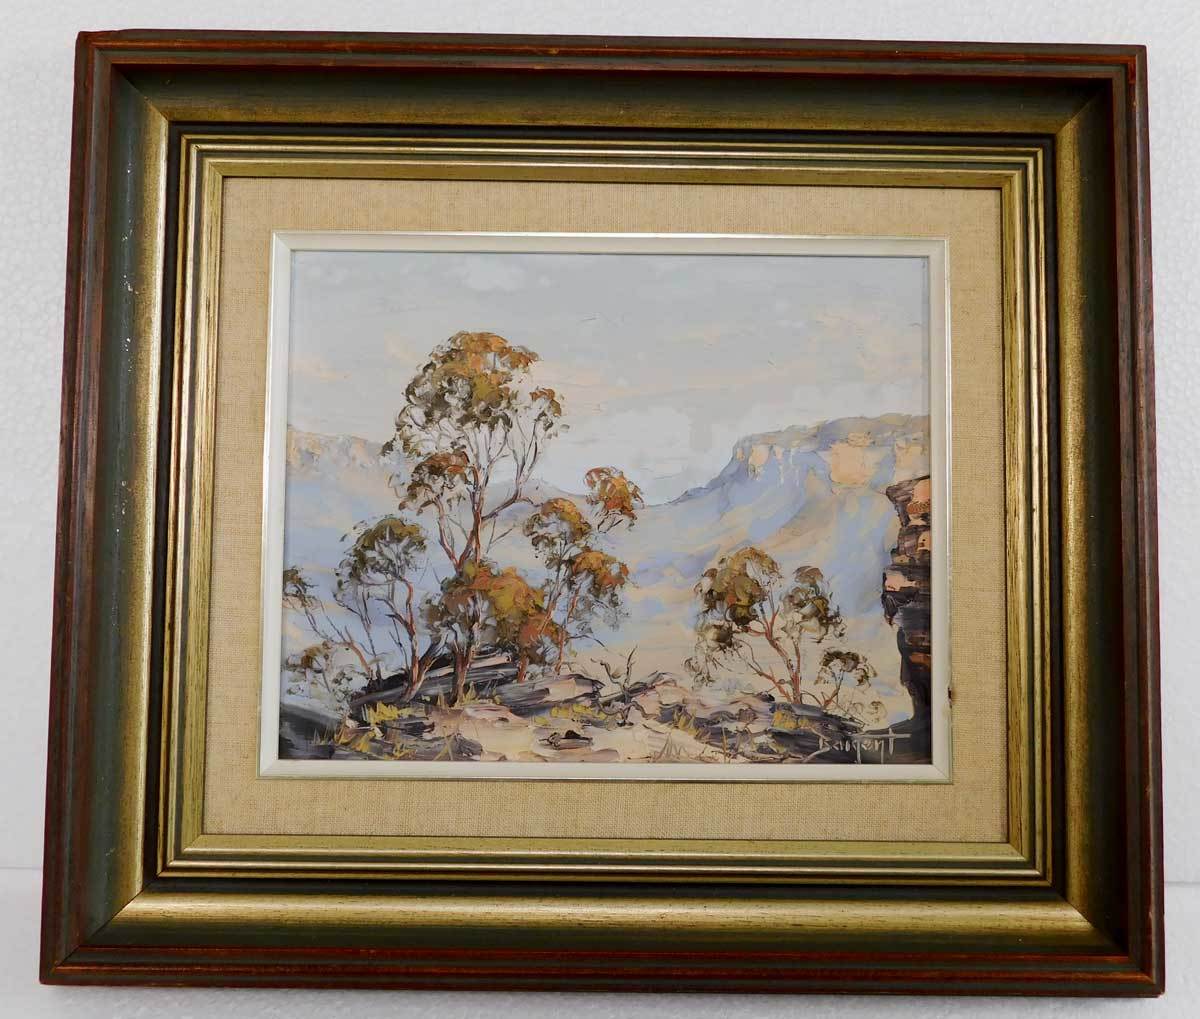 R0005 BRIAN BAIGENO Landscape painting, guaranteed authentic, Painting, Oil painting, Nature, Landscape painting